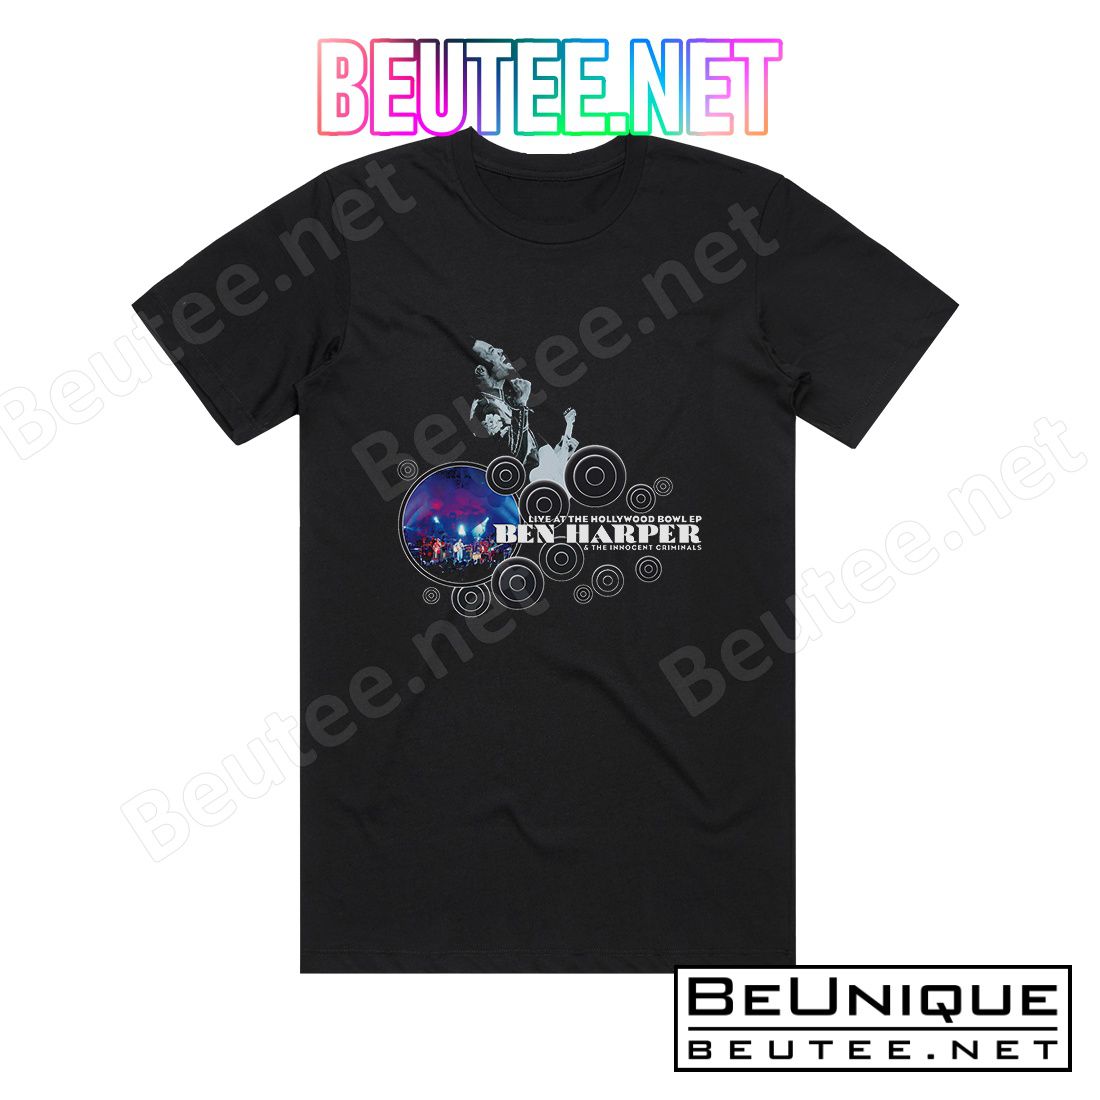 Ben Harper Live At The Hollywood Bowl Album Cover T-Shirt